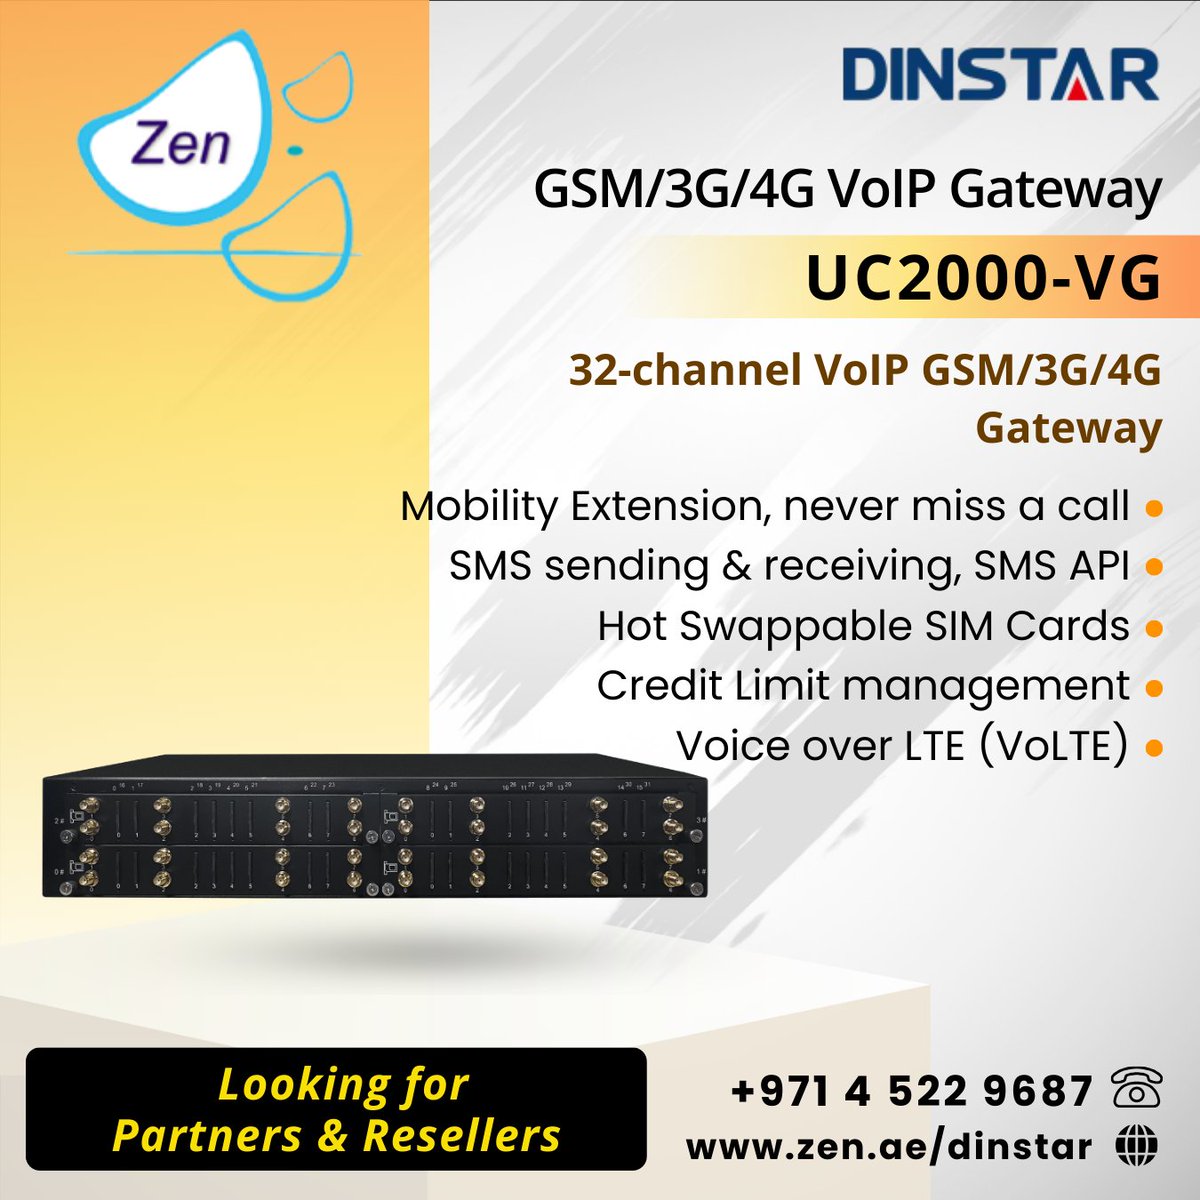 #dinstar UC2000-VG GSM/3G/4G VoIP Gateway
32-channel VoIP GSM/3G/4G VoIP Gateway
Looking for partners & resellers

smpl.is/8ky70

#3cx #zenitdxb #zenit #businesscommunication #dubaistartup #3cxhosting #simhosting #saudistartups